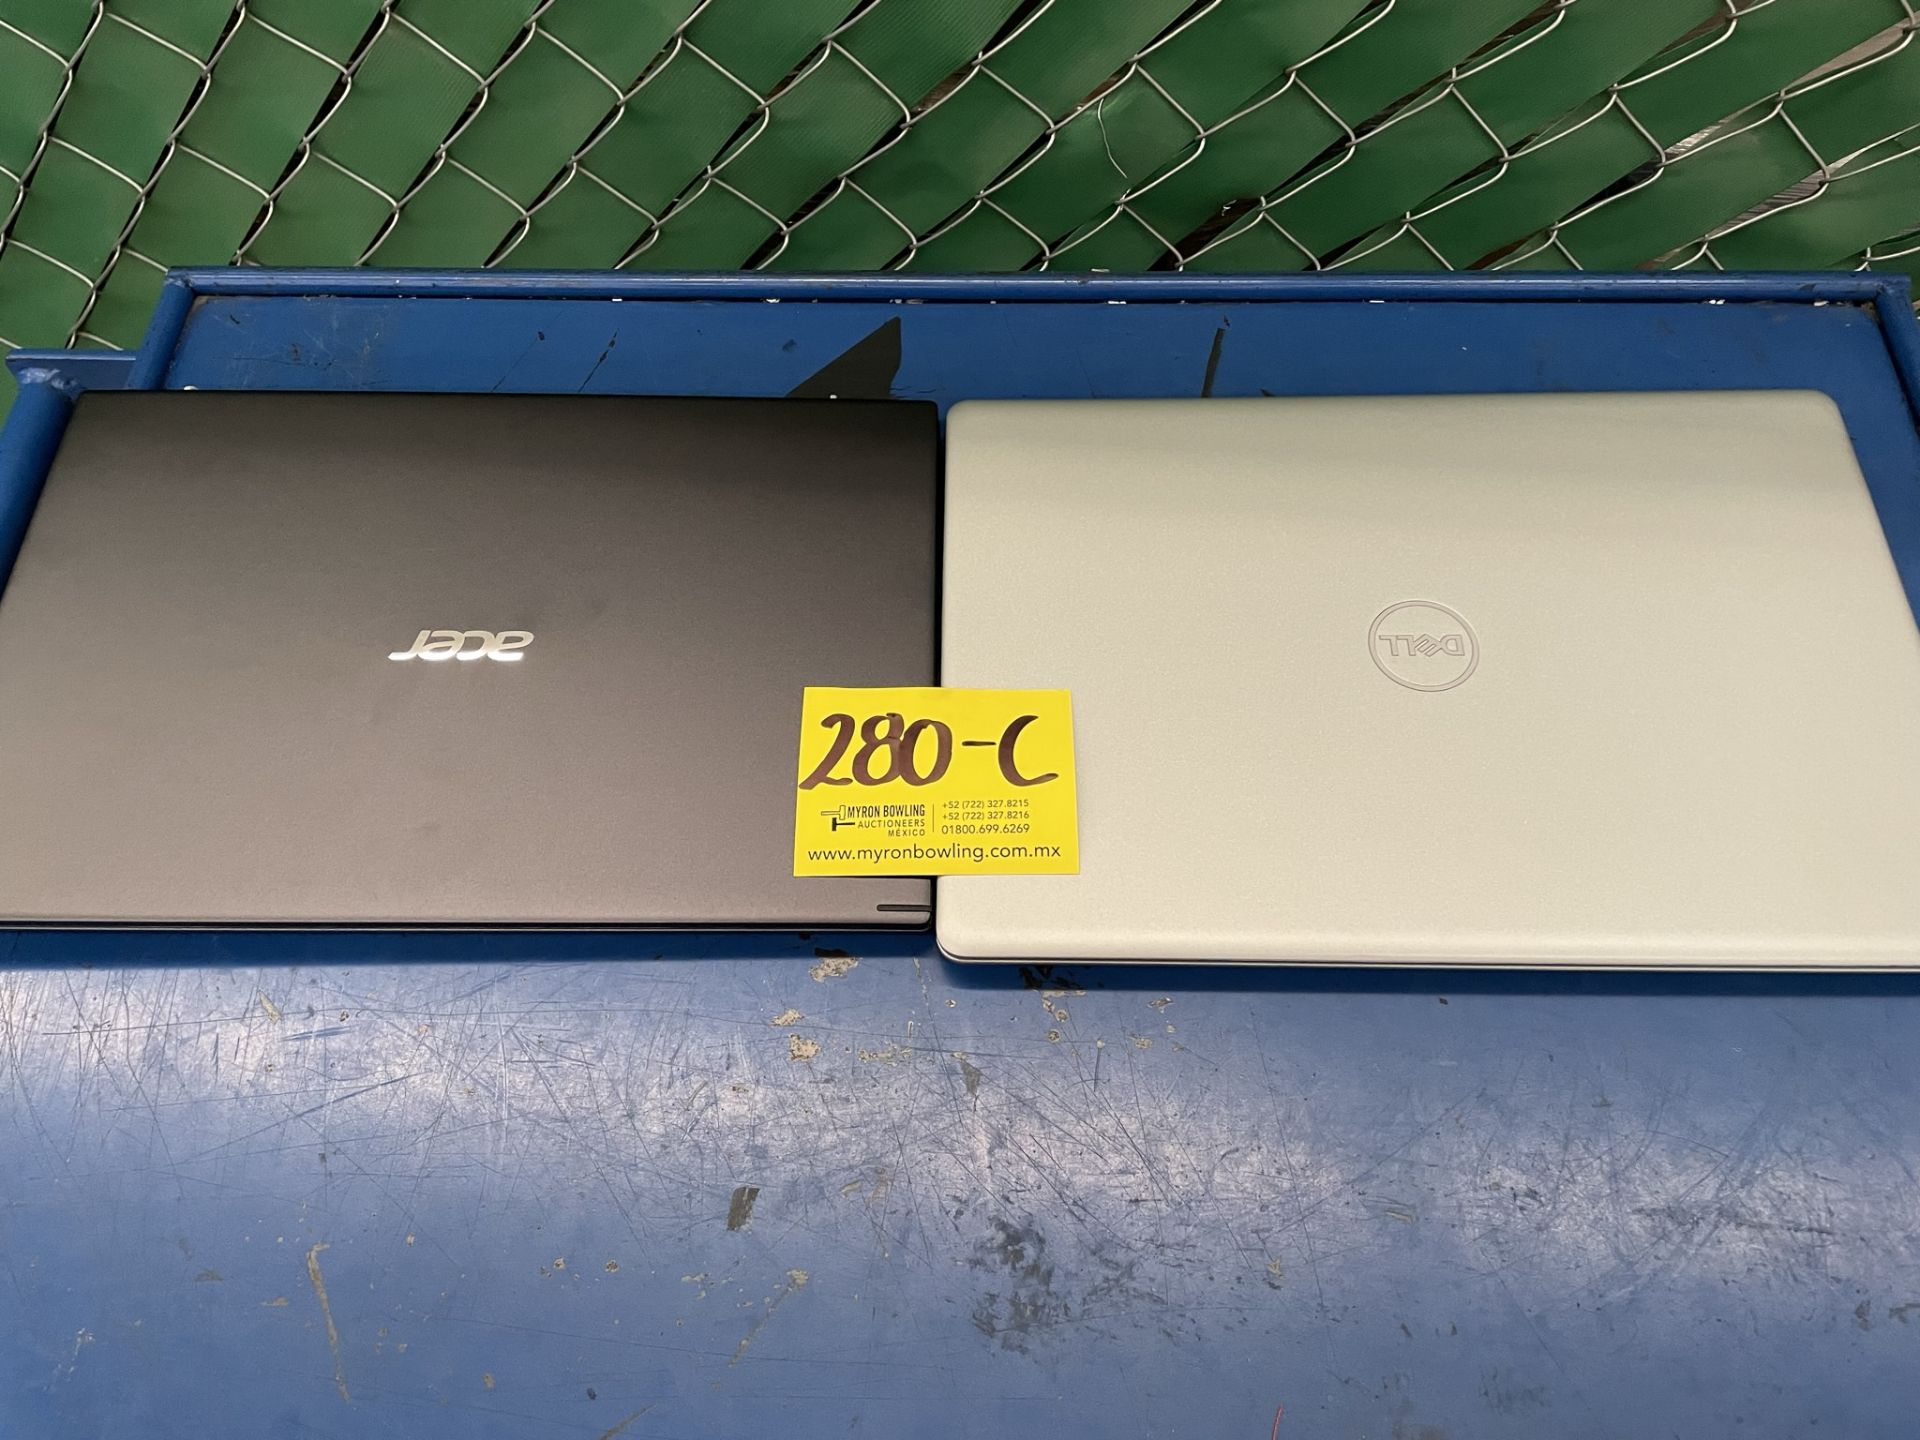 (EQUIPO NUEVO) Lote De 2 Laptops Contiene: 1 Laptop Marca DELL, Modelo I3505, Serie N/D, SO WINDOWS - Image 8 of 9